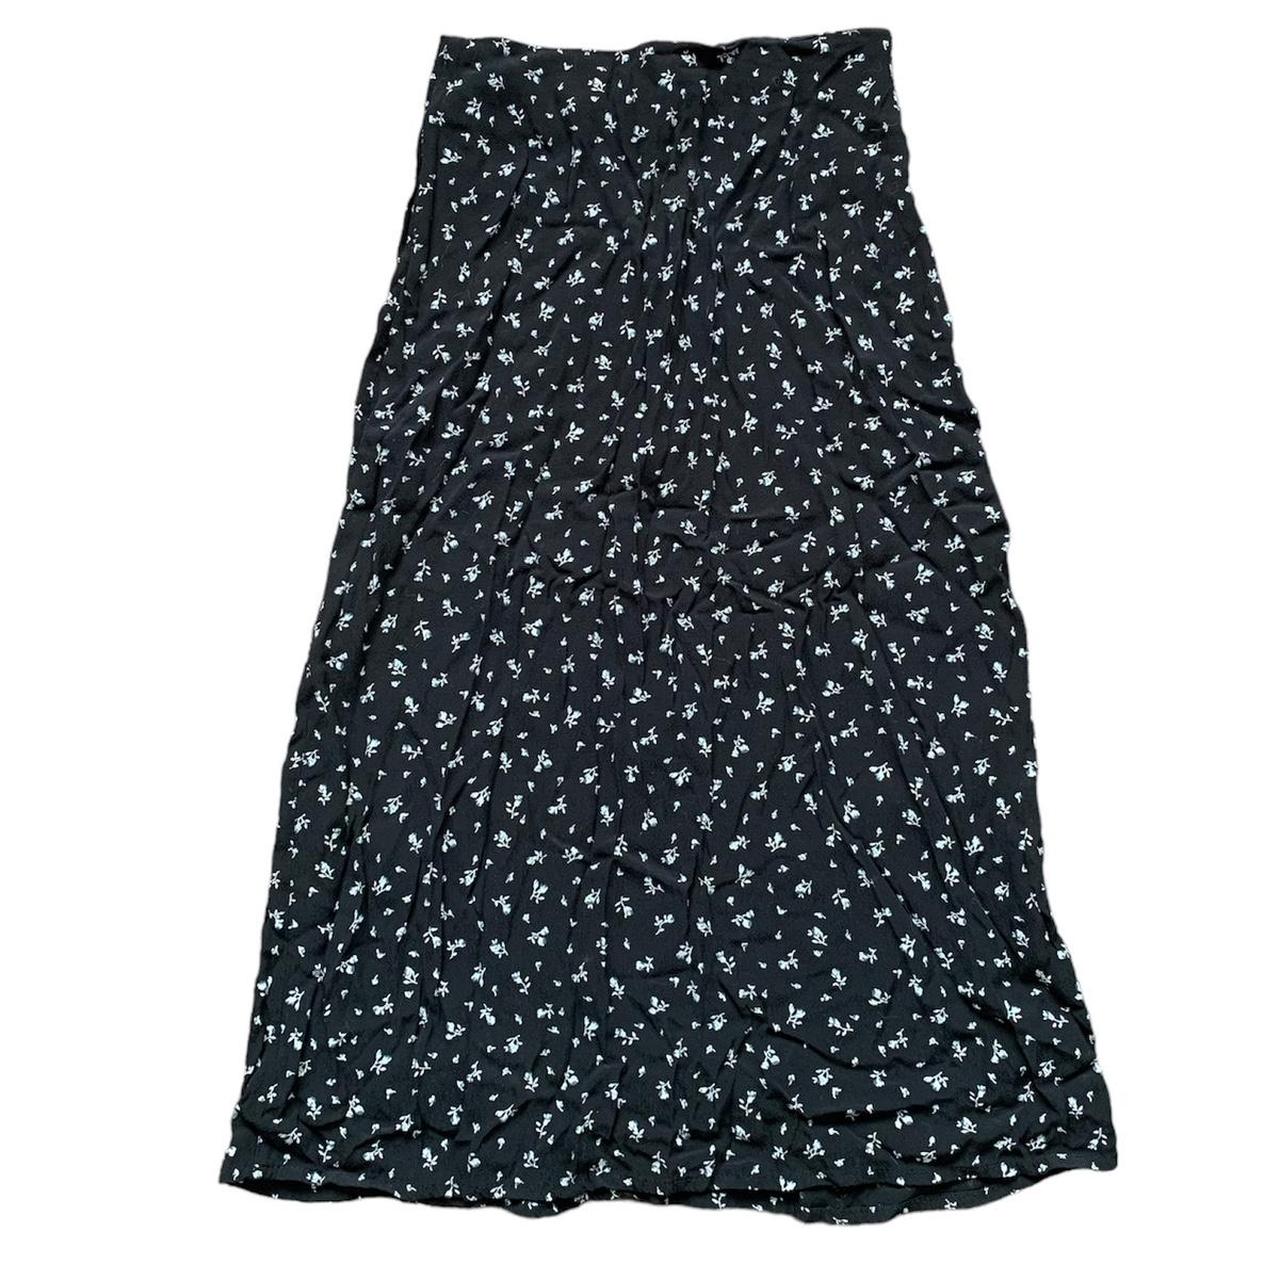 Brandy Melville midi skirt. Black with white floral.... - Depop